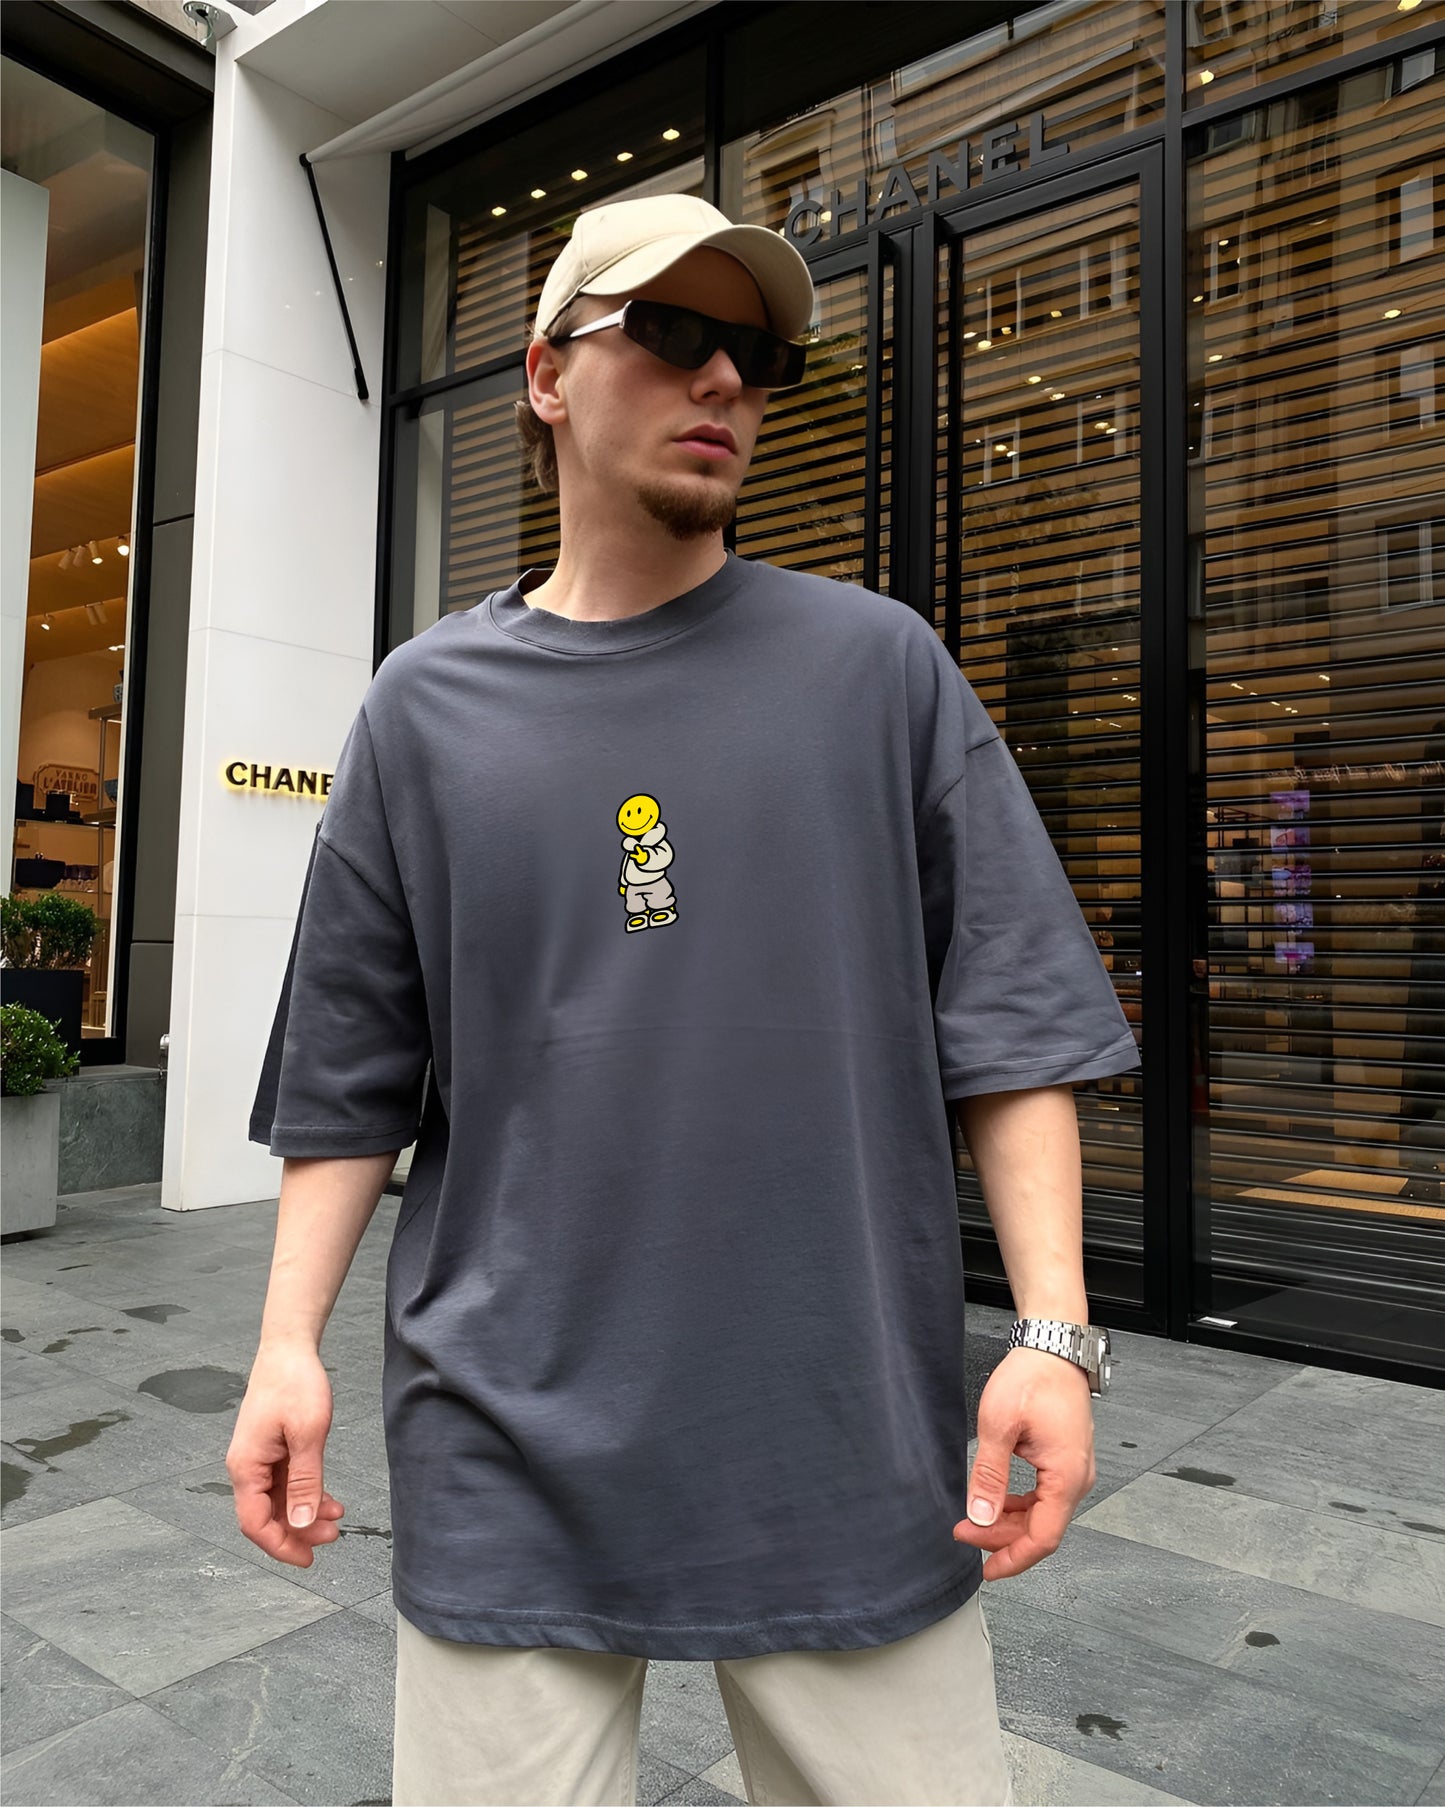 Grey "Smiley Boy" Printed Oversize T-Shirt